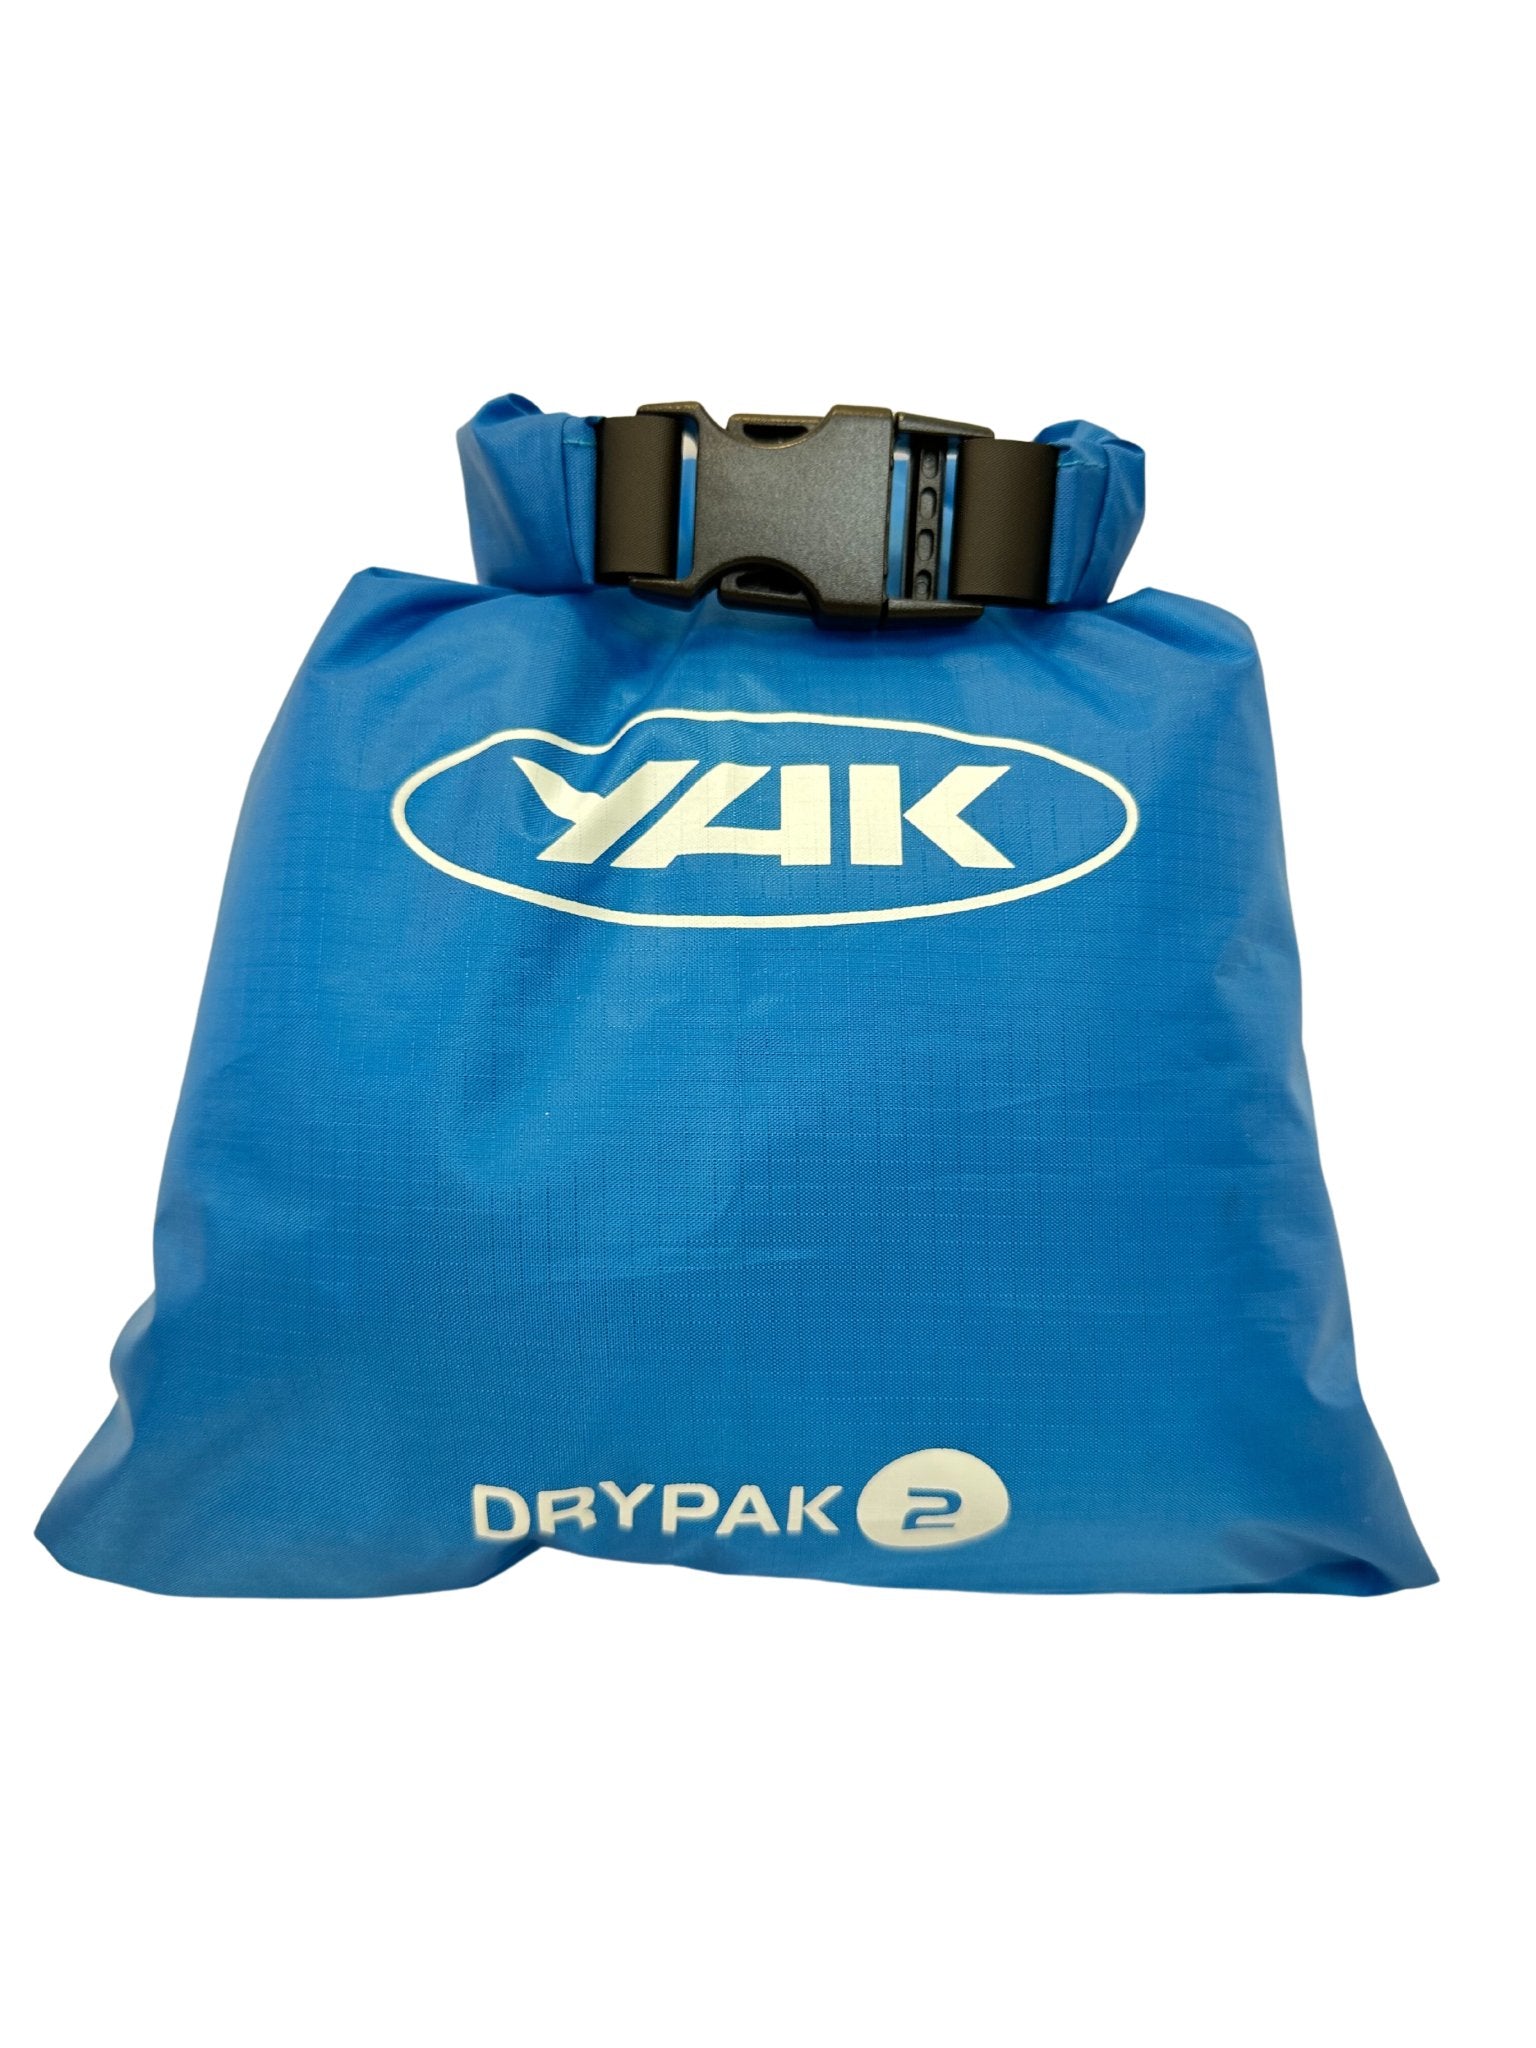 Yak Dry Bag Set of Three - Worthing Watersports - 7003331 - Dry Bags - YAK